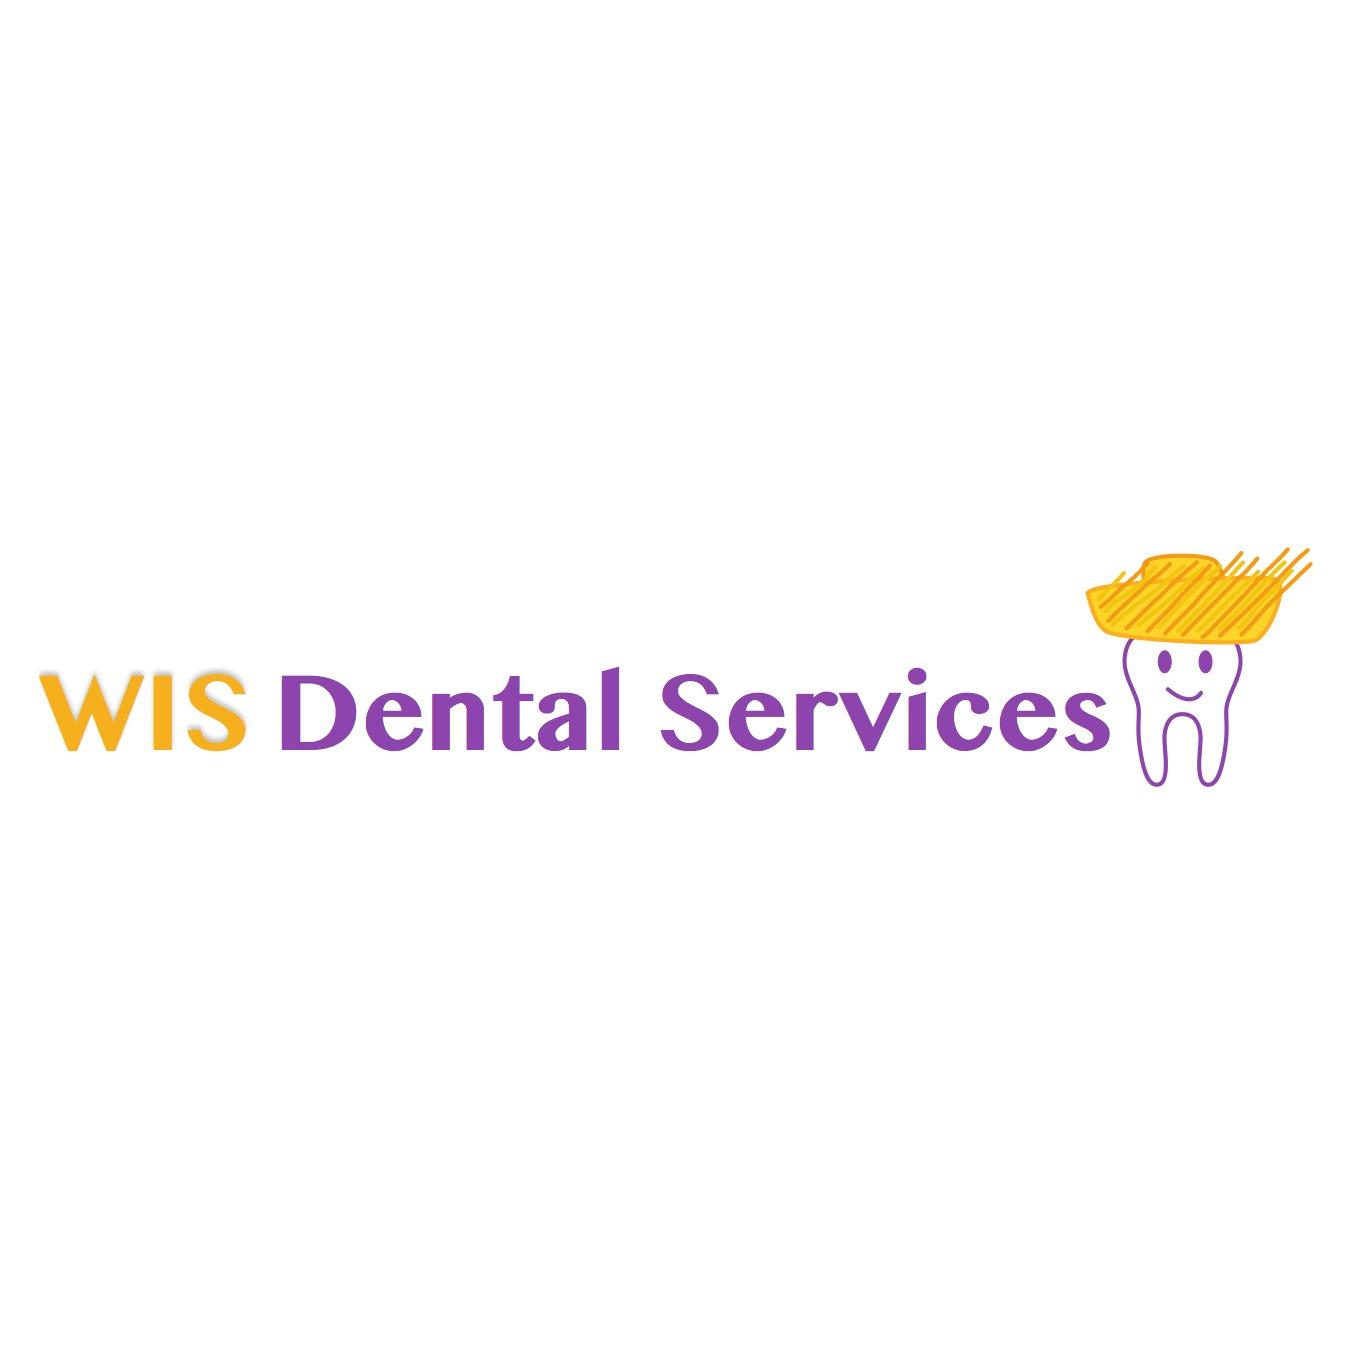 WIS Dental Services Logo